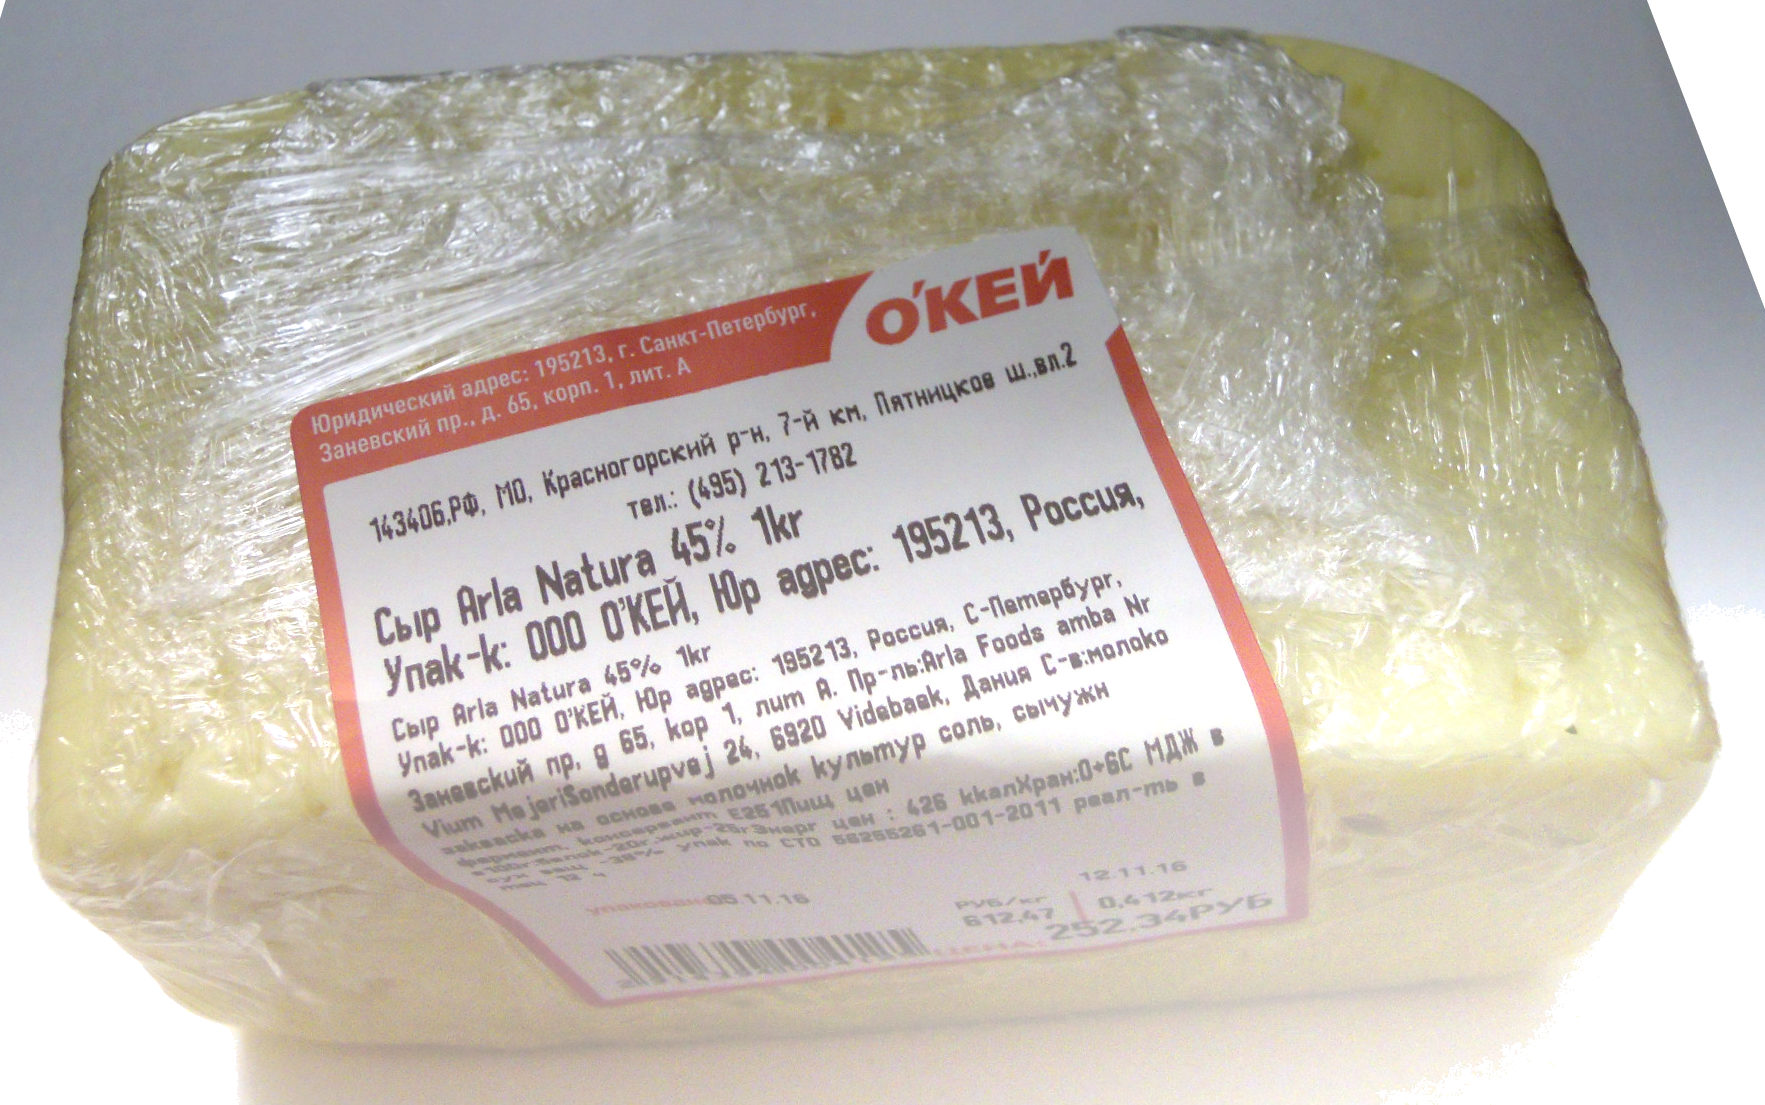 Сыр Arla Natura 45% - Product - ru